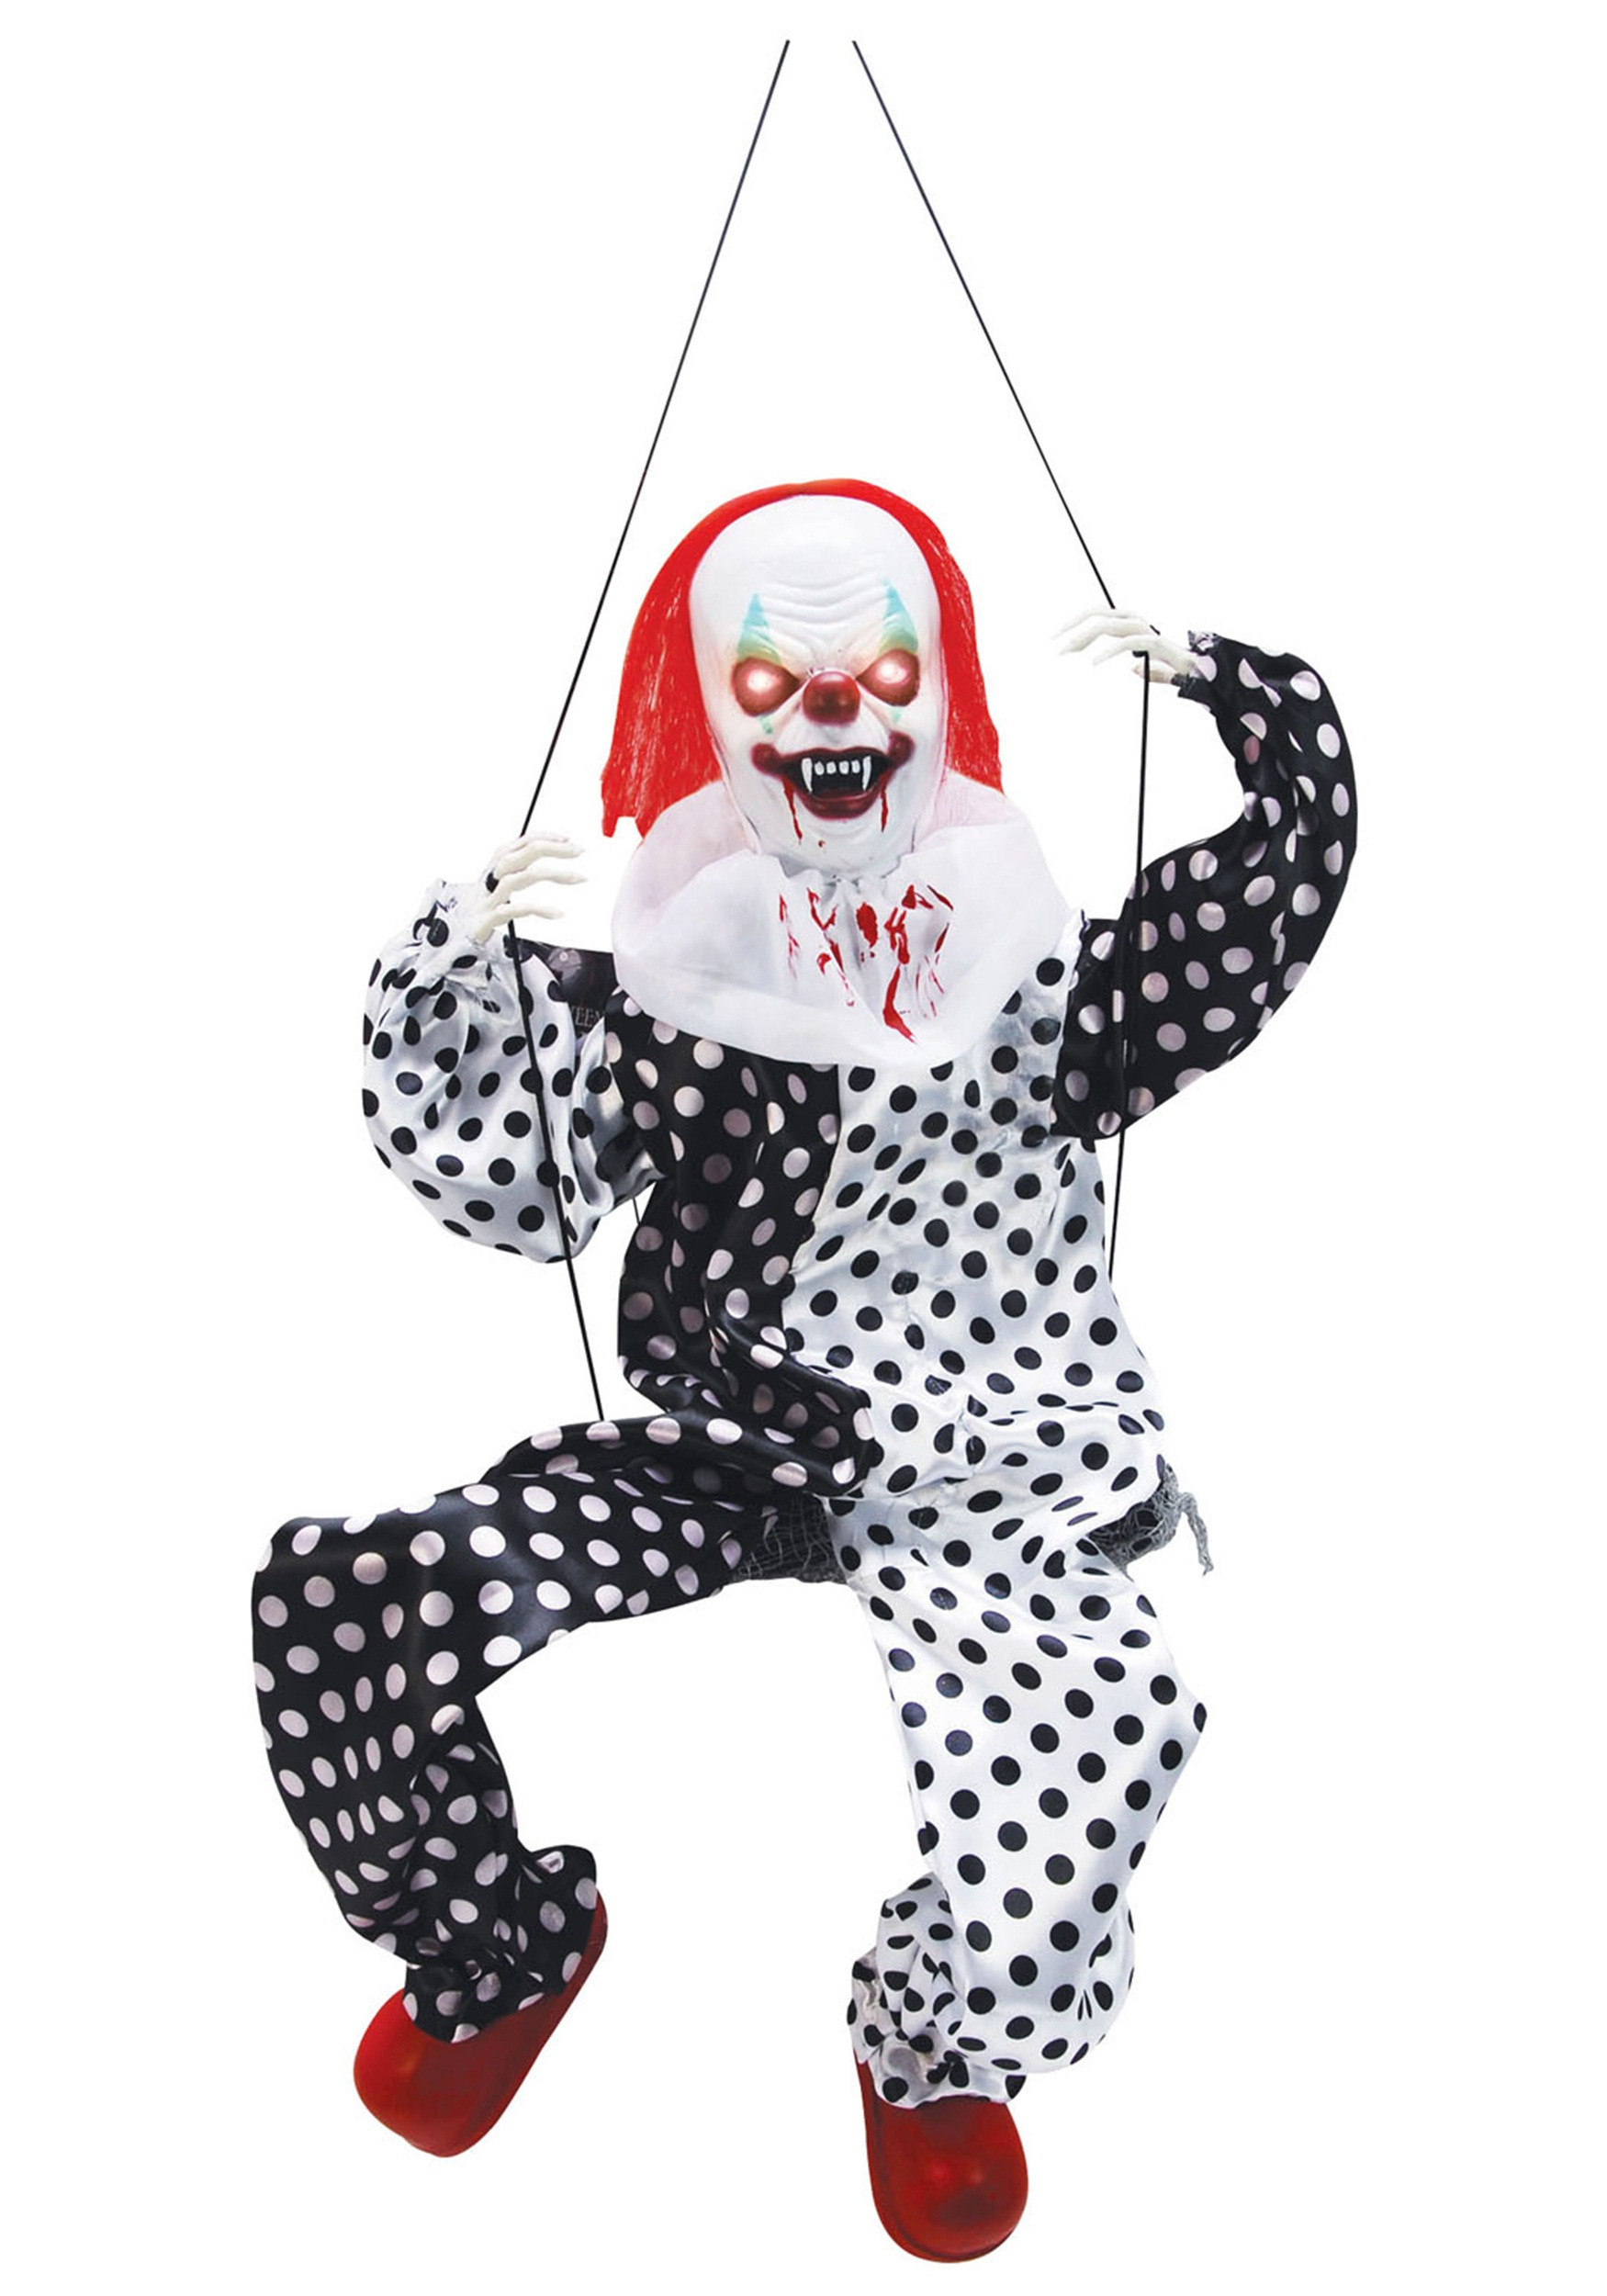 Swing Halloween Decoration
 Leg Kicking Clown on Swing